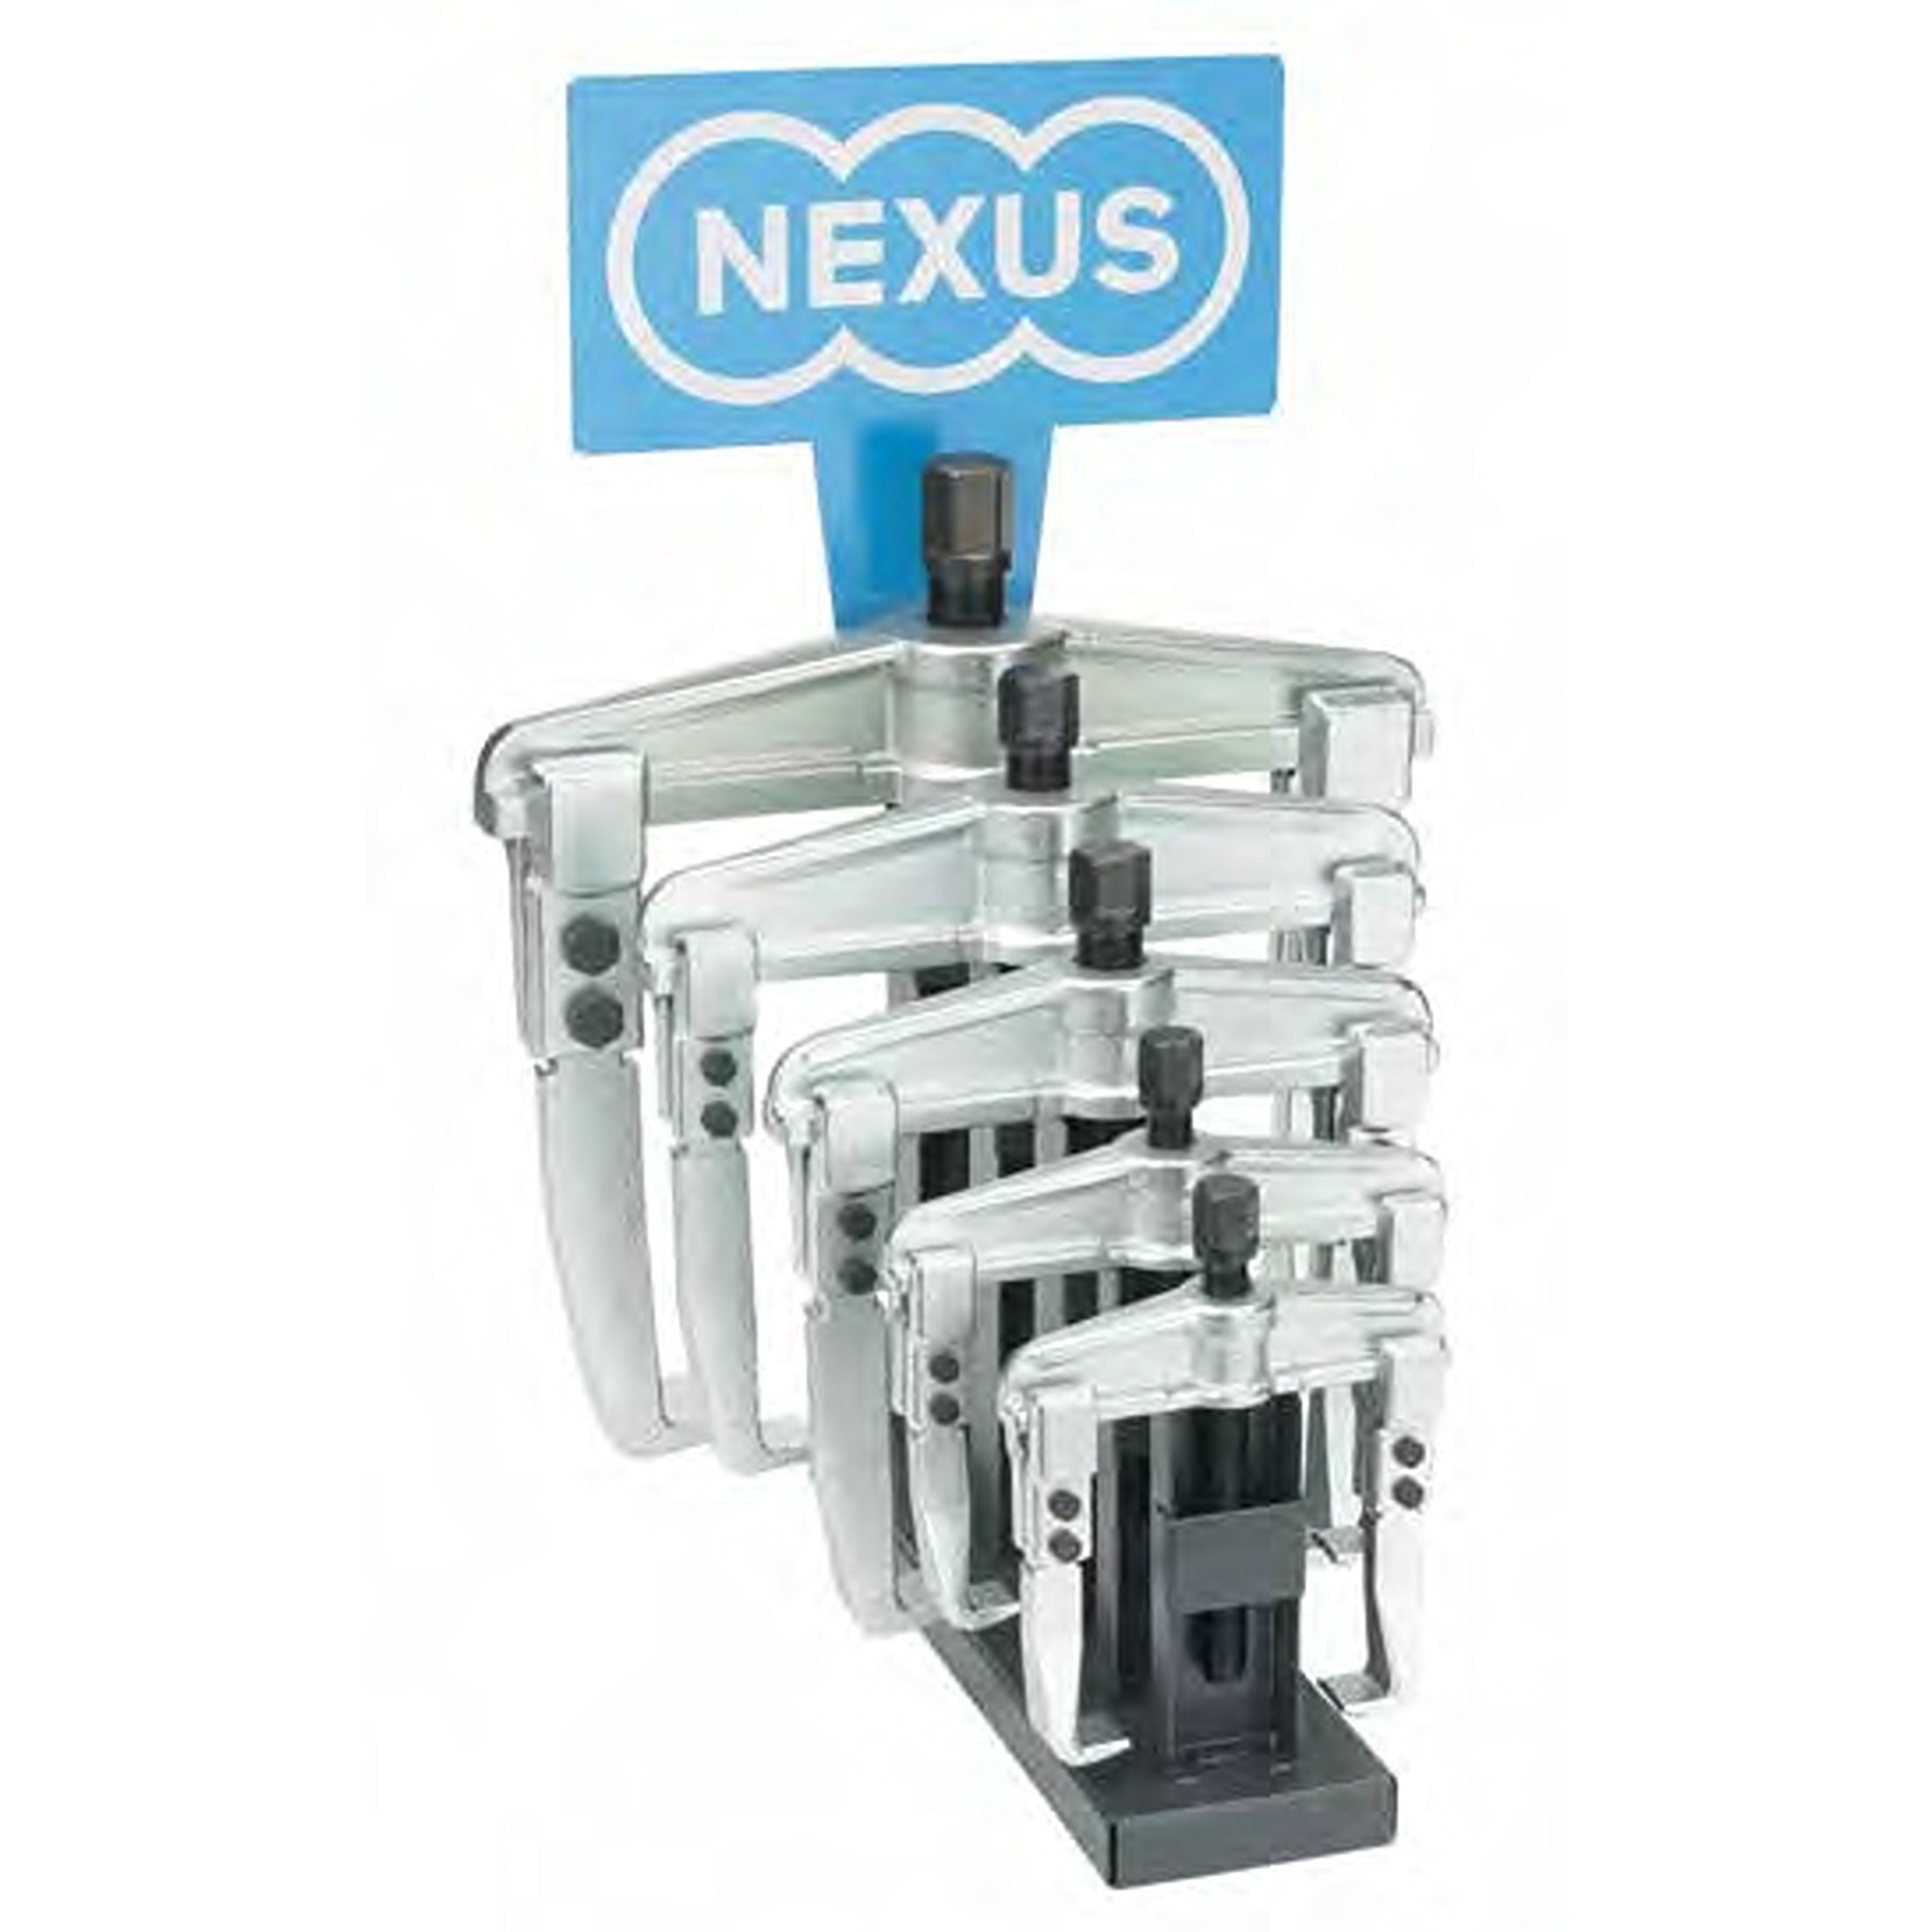 NEXUS 100-ST Sales Displays With 2-Arm Universal Puller - Premium 2-Arm Universal Puller from NEXUS - Shop now at Yew Aik.